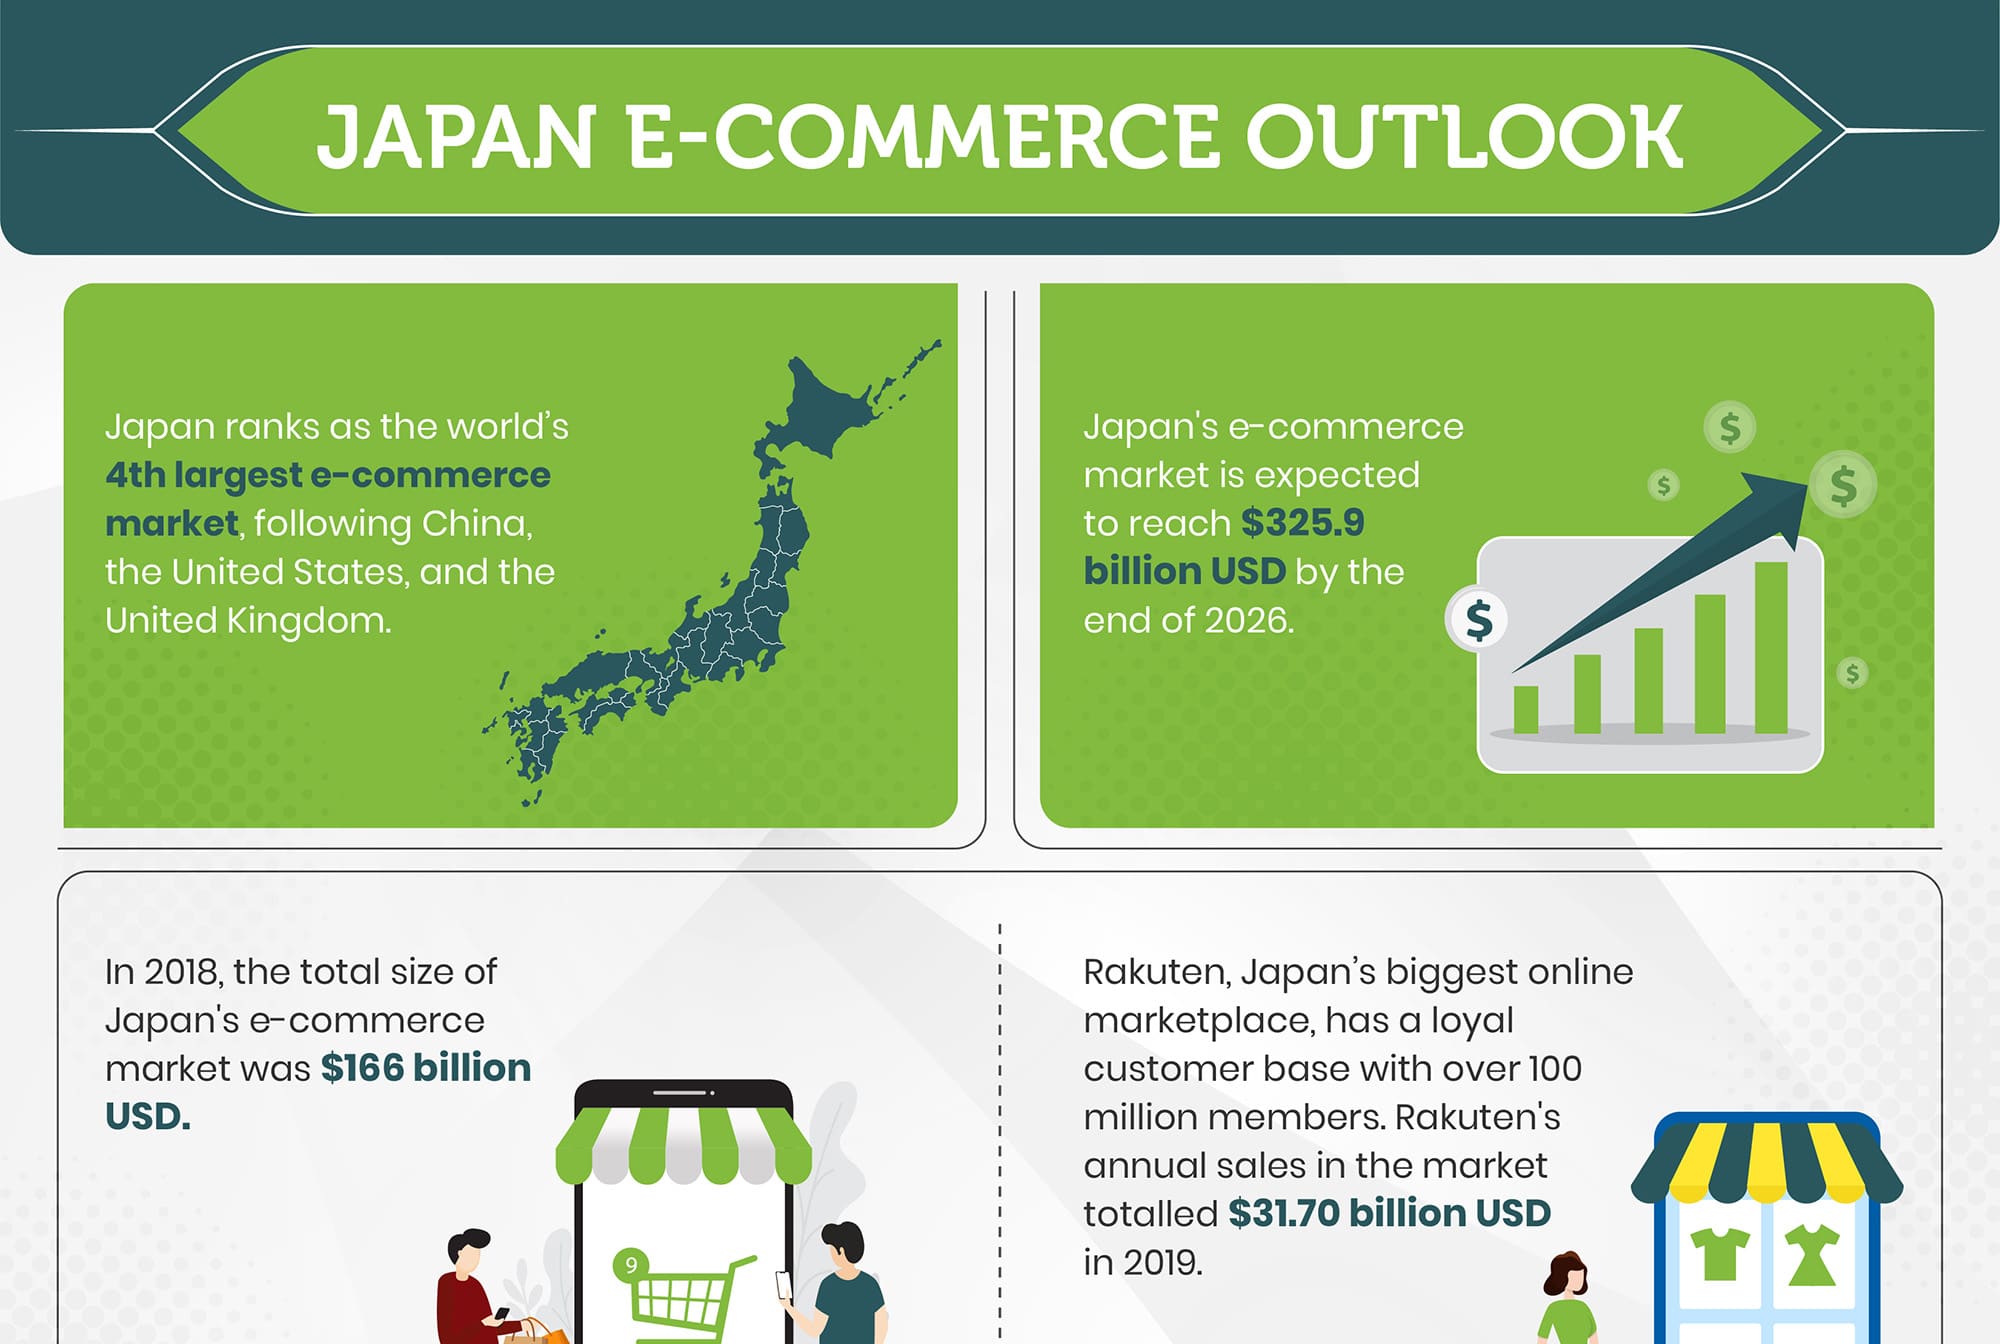 Japan Outlook WPIC Marketing + Technologies